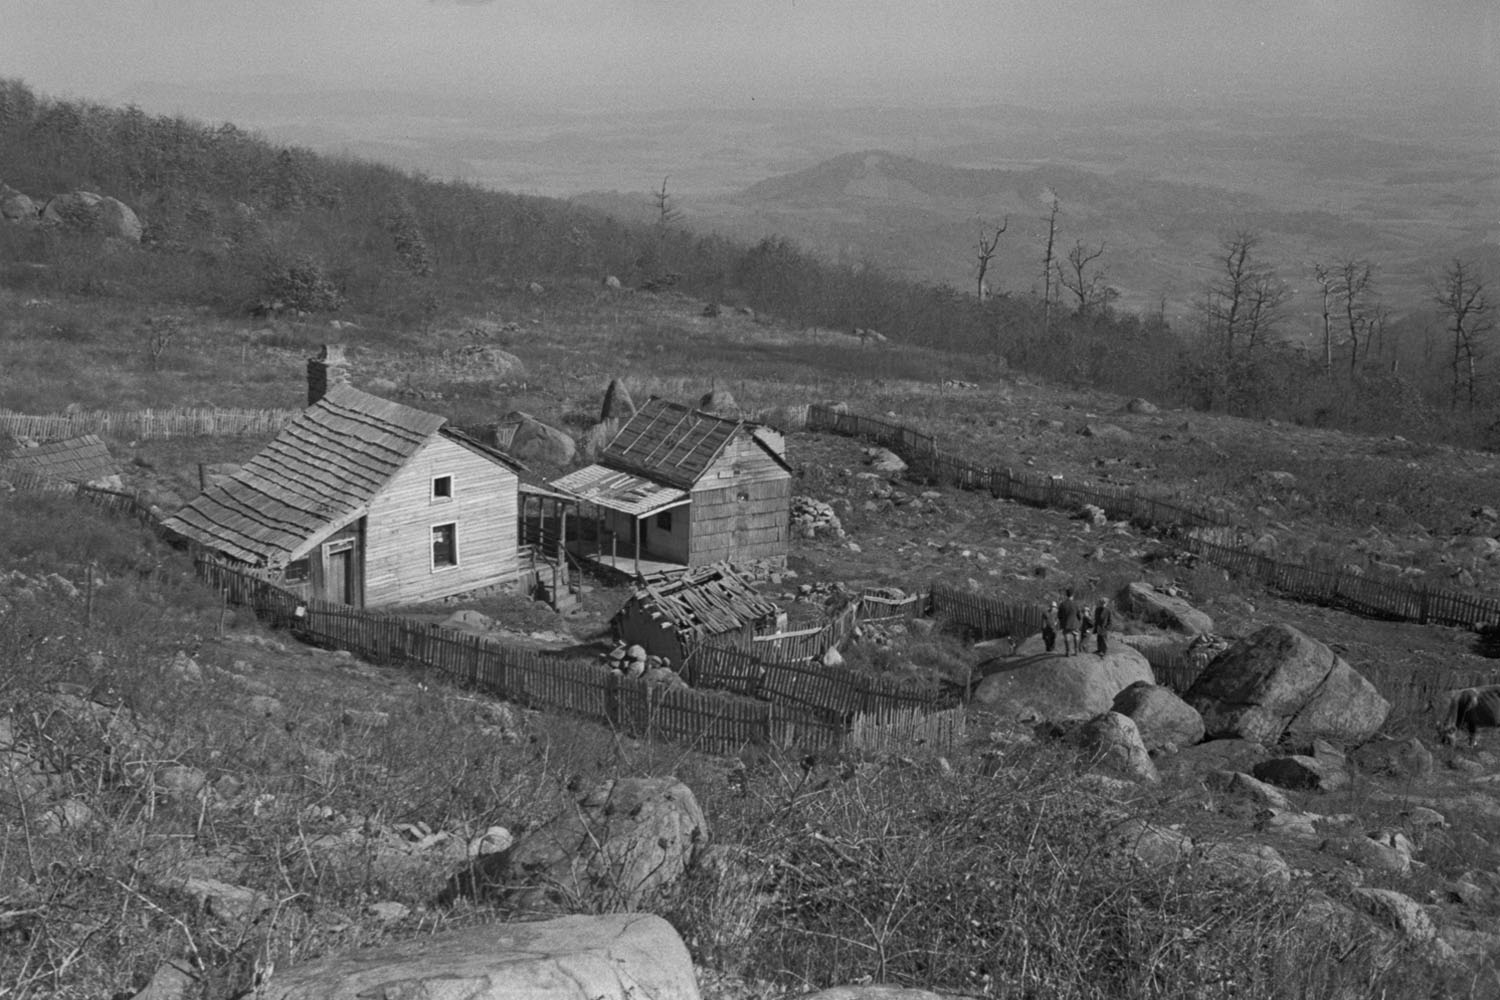 Home on Corbin Hollow Farm, Shenandoah National Park, October 1935